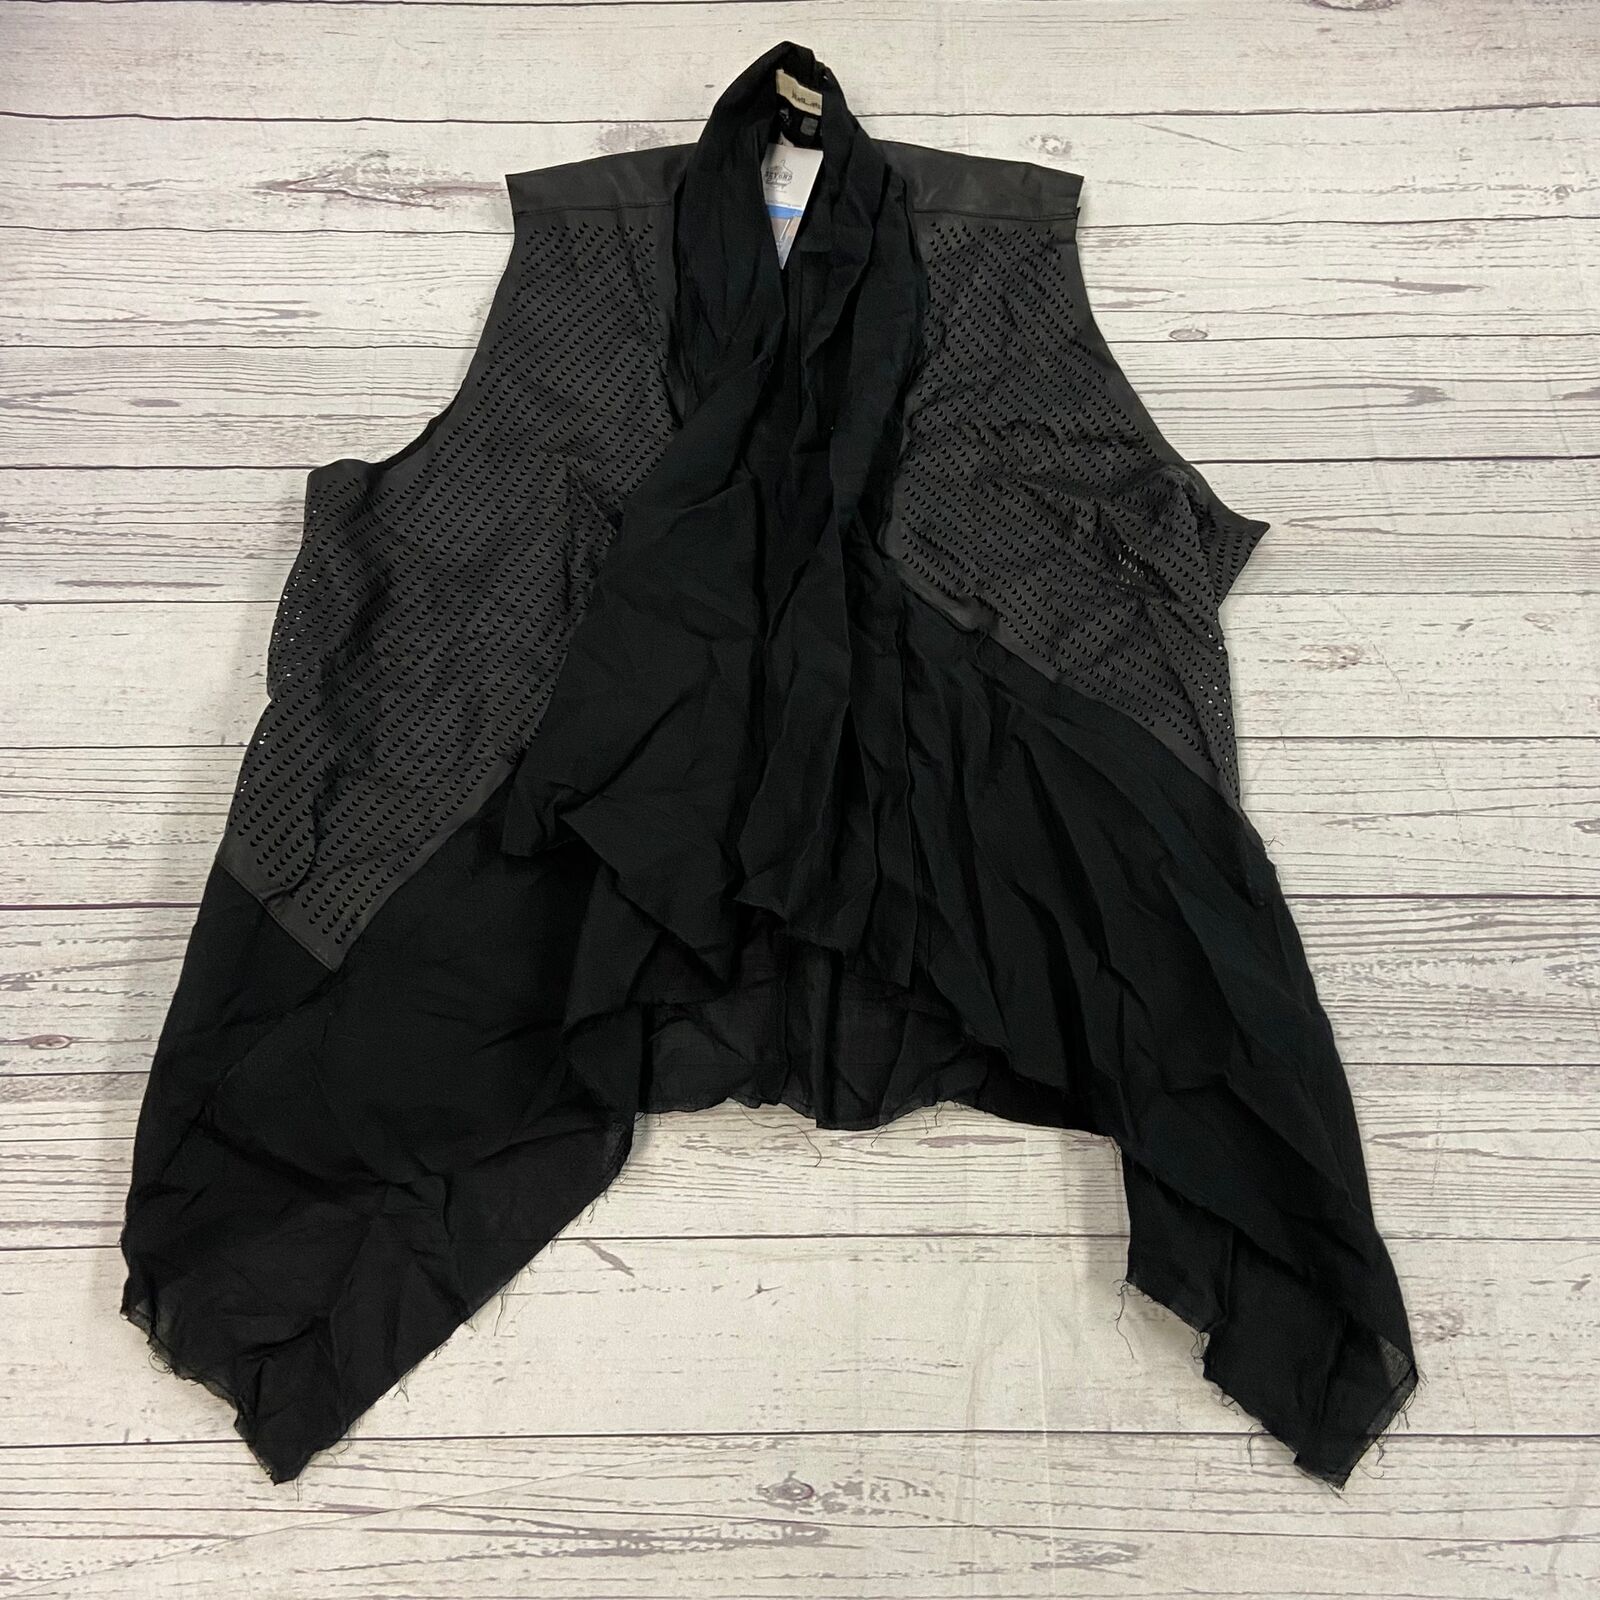 Jakett etc. Black Sleeveless Die Cut Leather Cardigan Jacket Vest Women Size L N